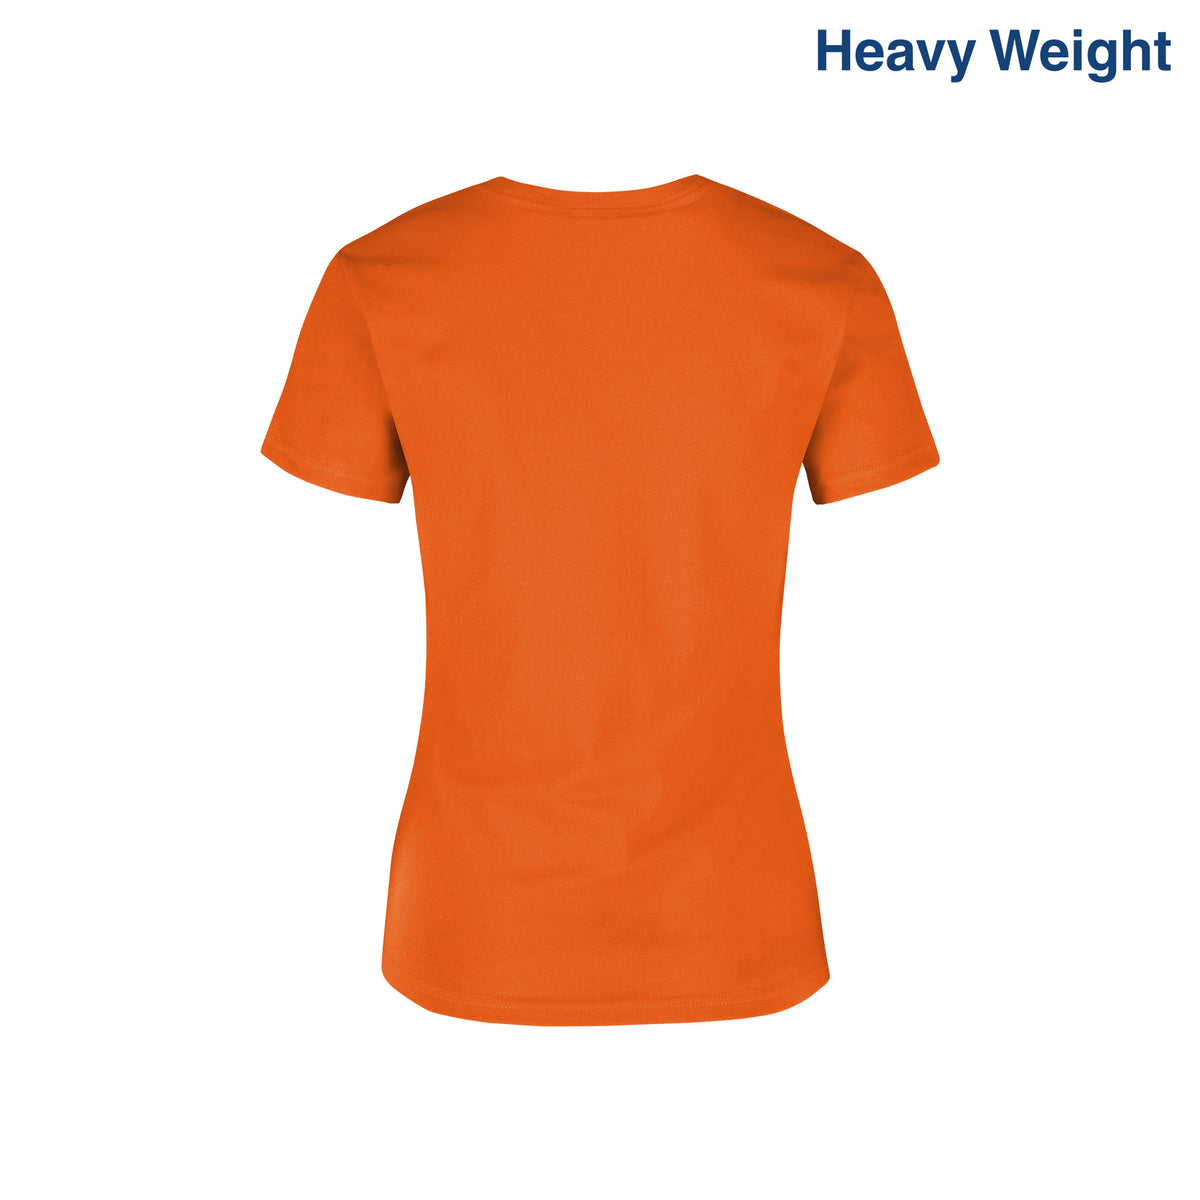 Women’s Heavy Weight Crew Neck Short Sleeve Silhouette T-Shirt (Orange)